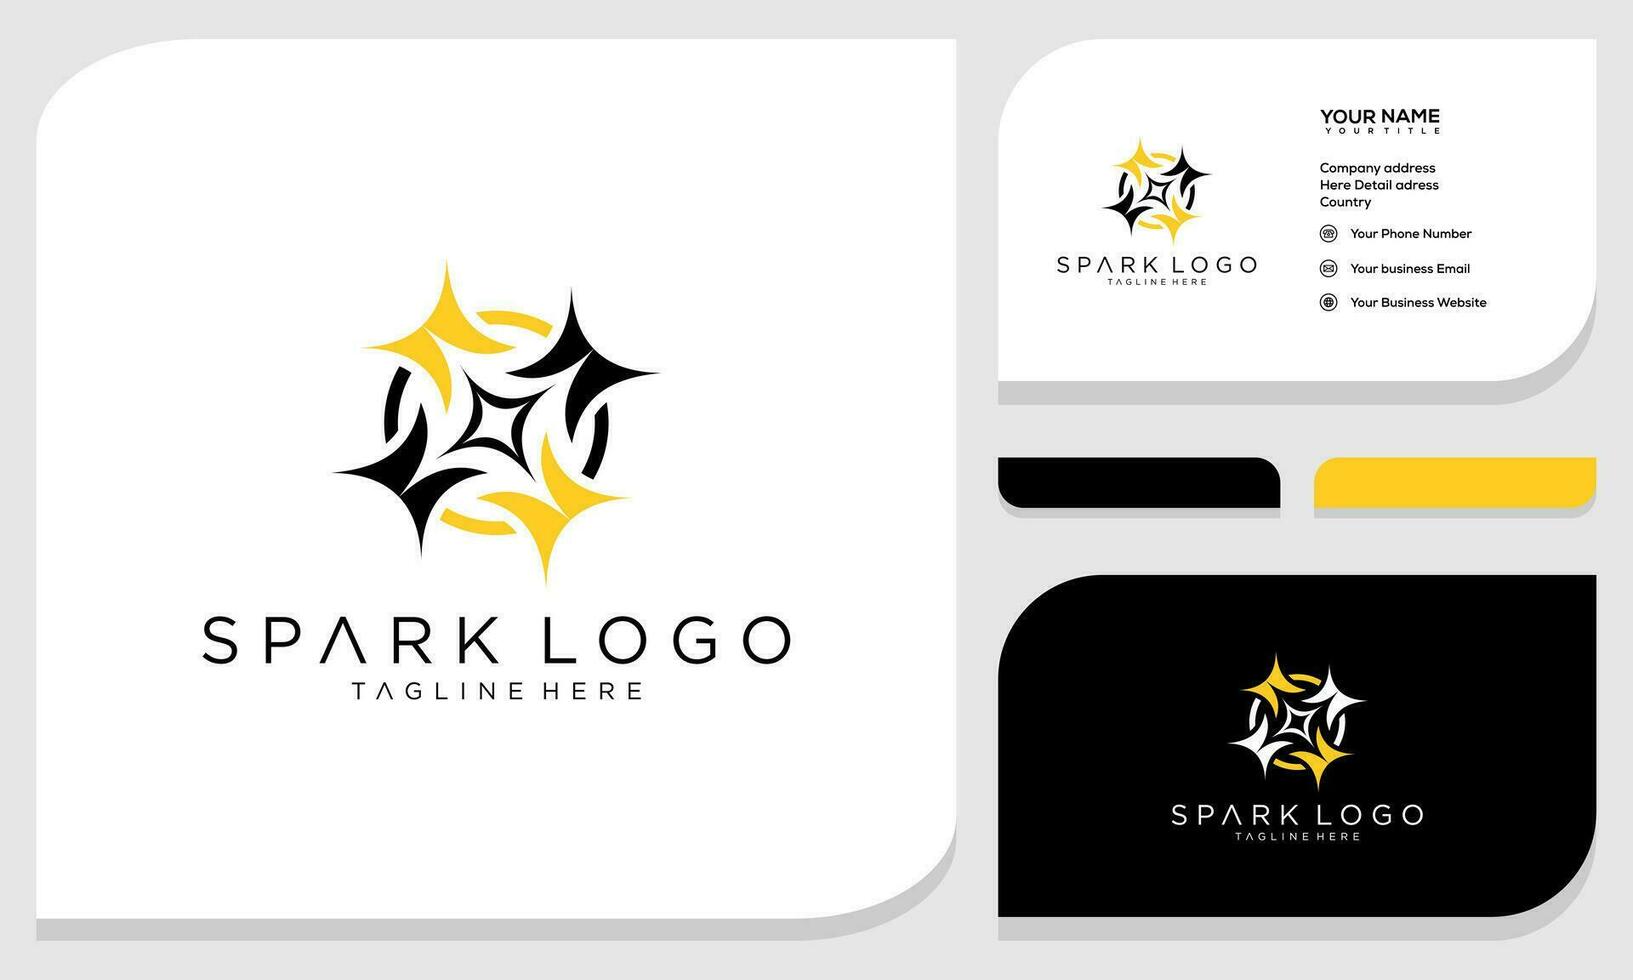 spark logo graphic vector icon. logo design and business card